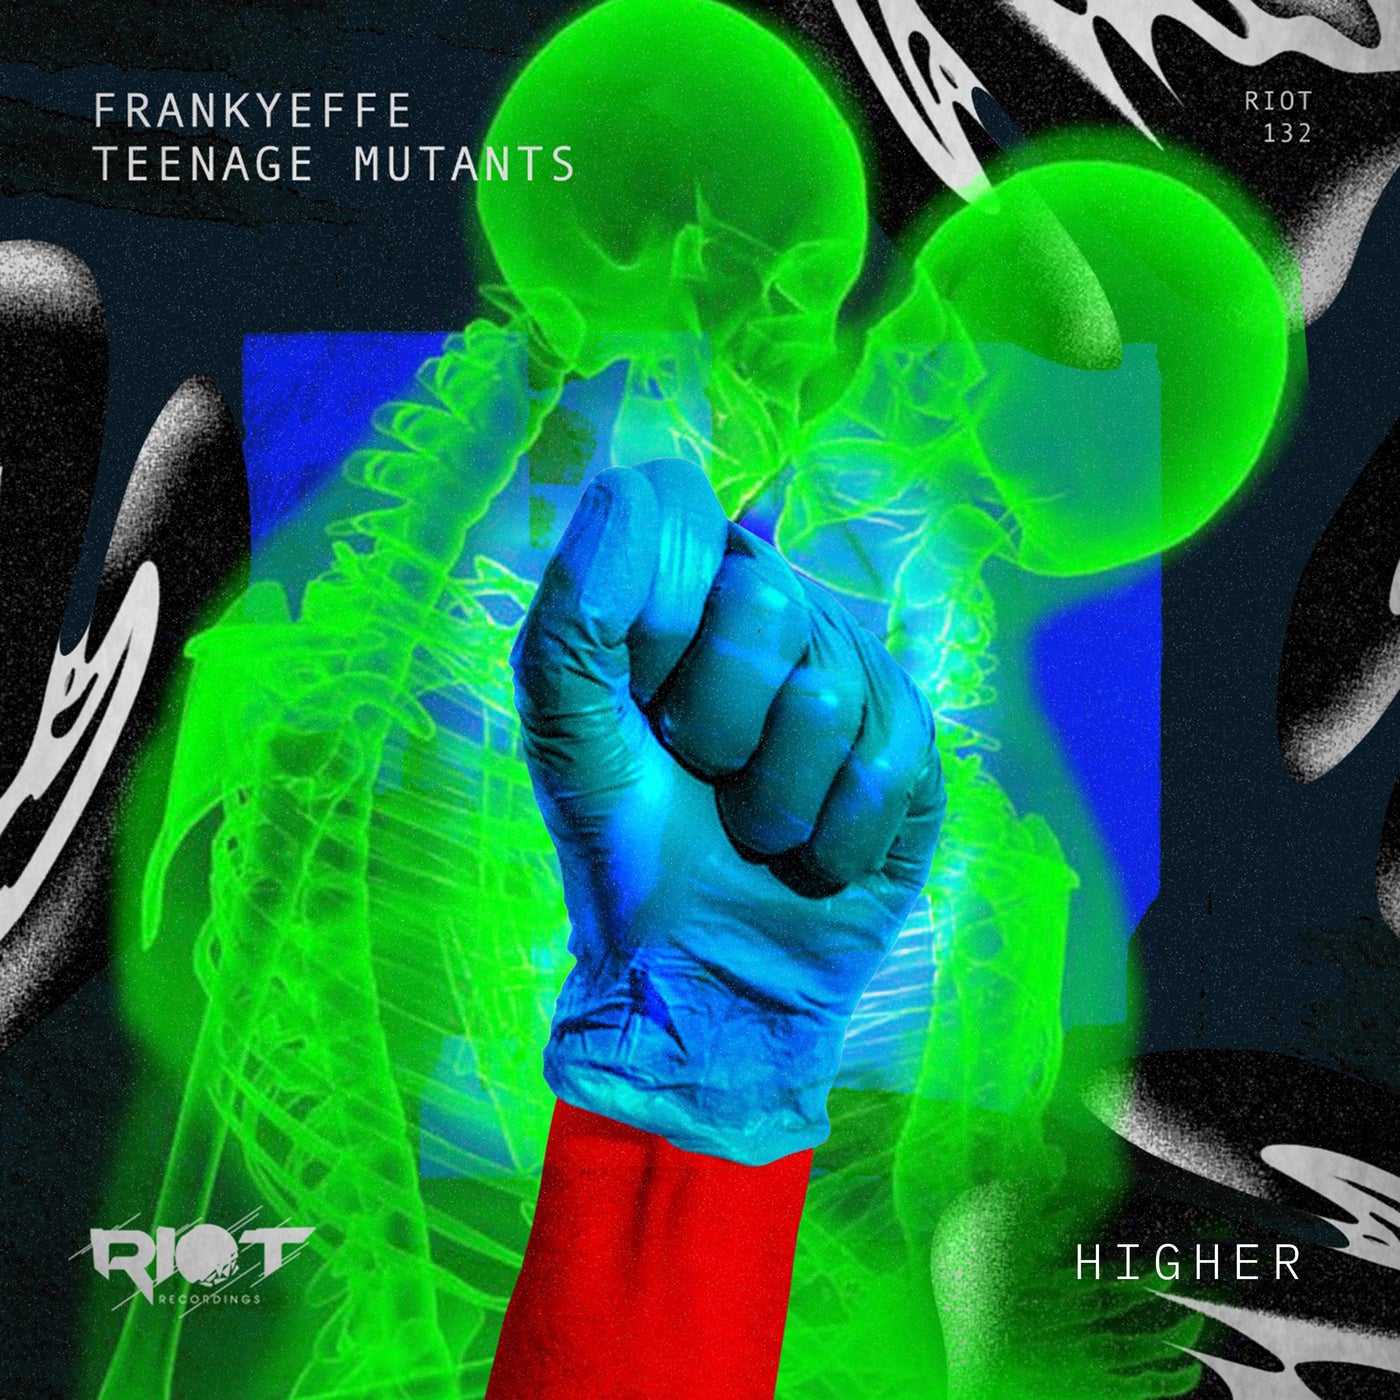 image cover: Frankyeffe, Teenage Mutants - Higher / RIOT132